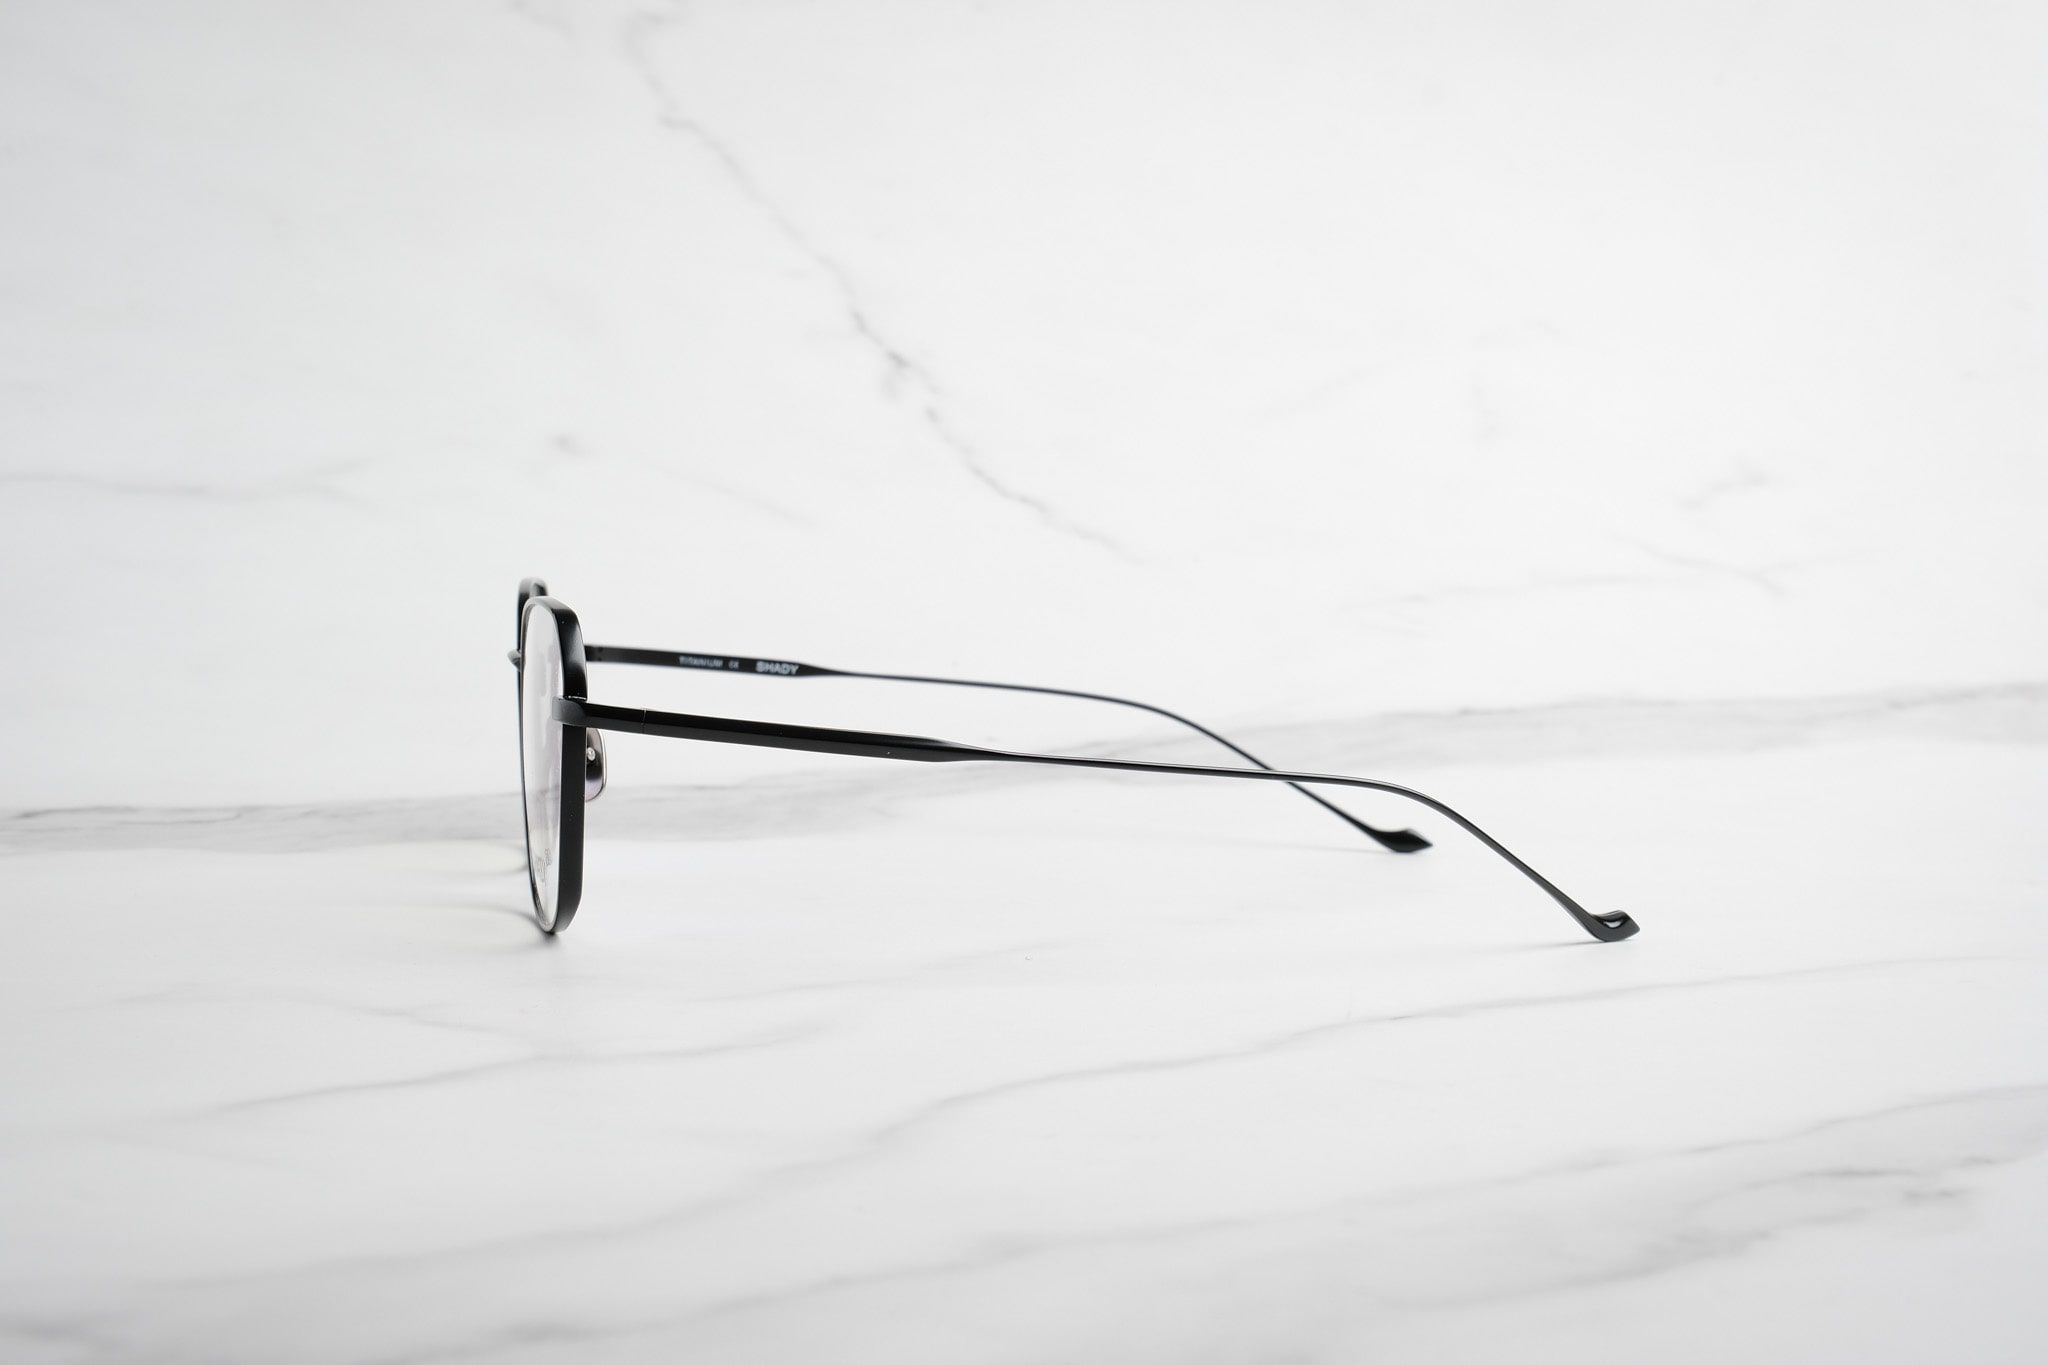  SHADY Eyewear - Glasses - G2661 